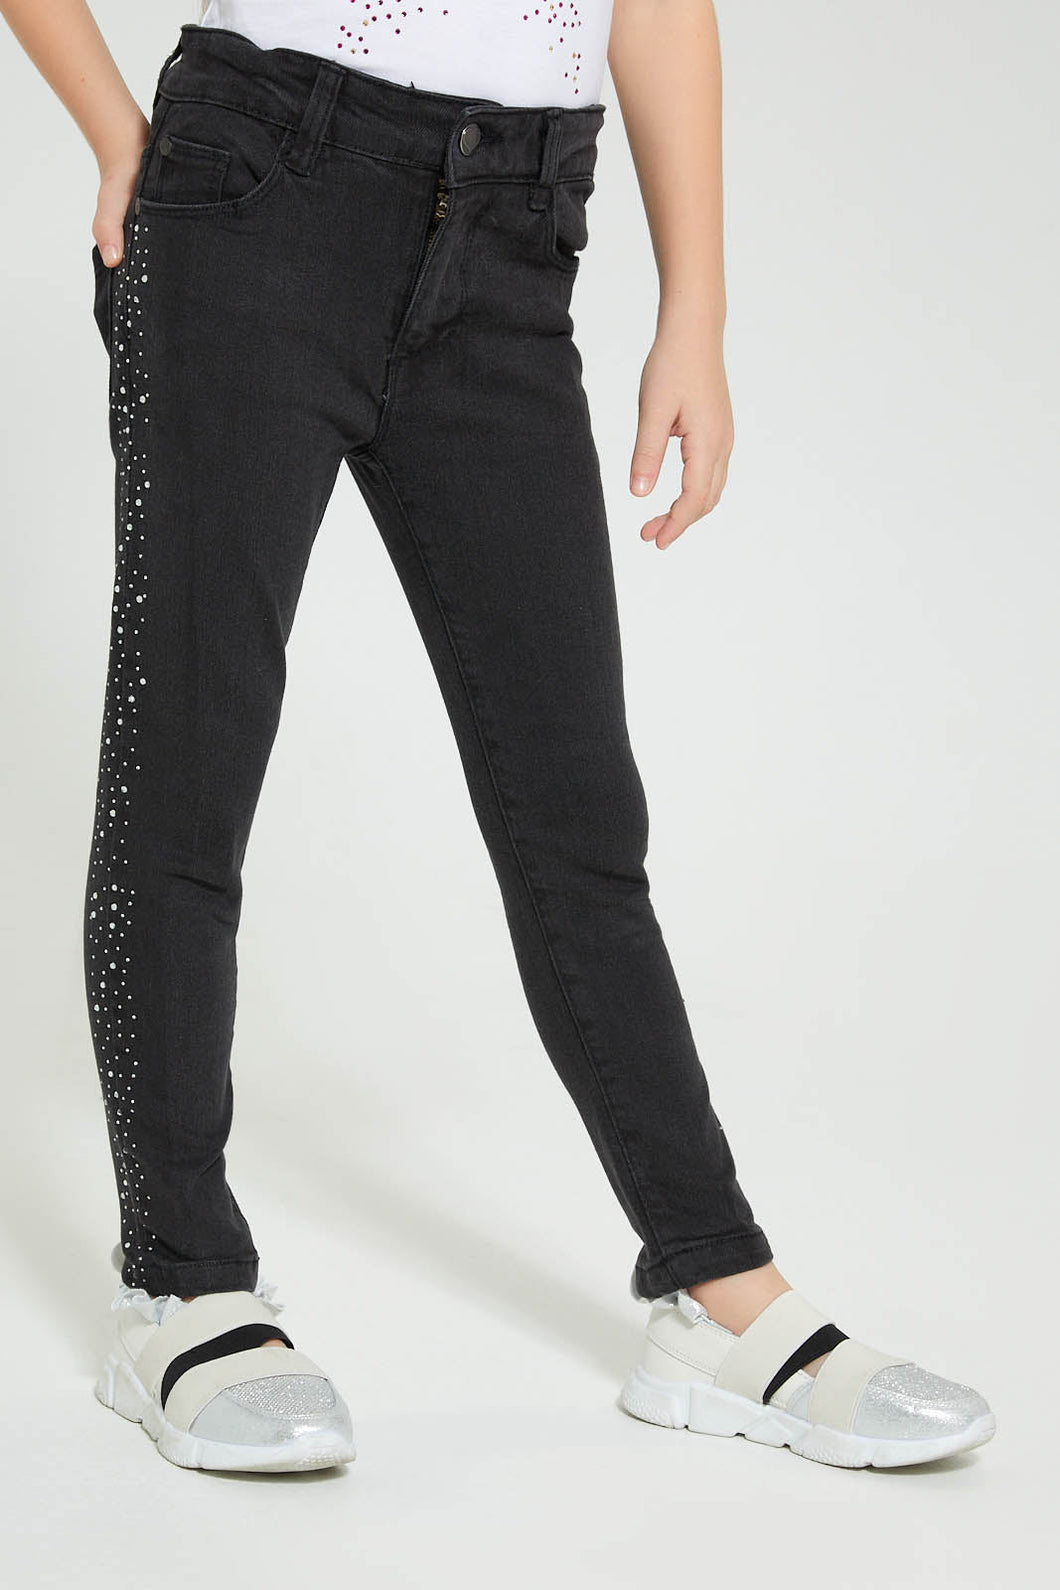 Black Jean With Studs جينز مزين بستراس باللون الأسود